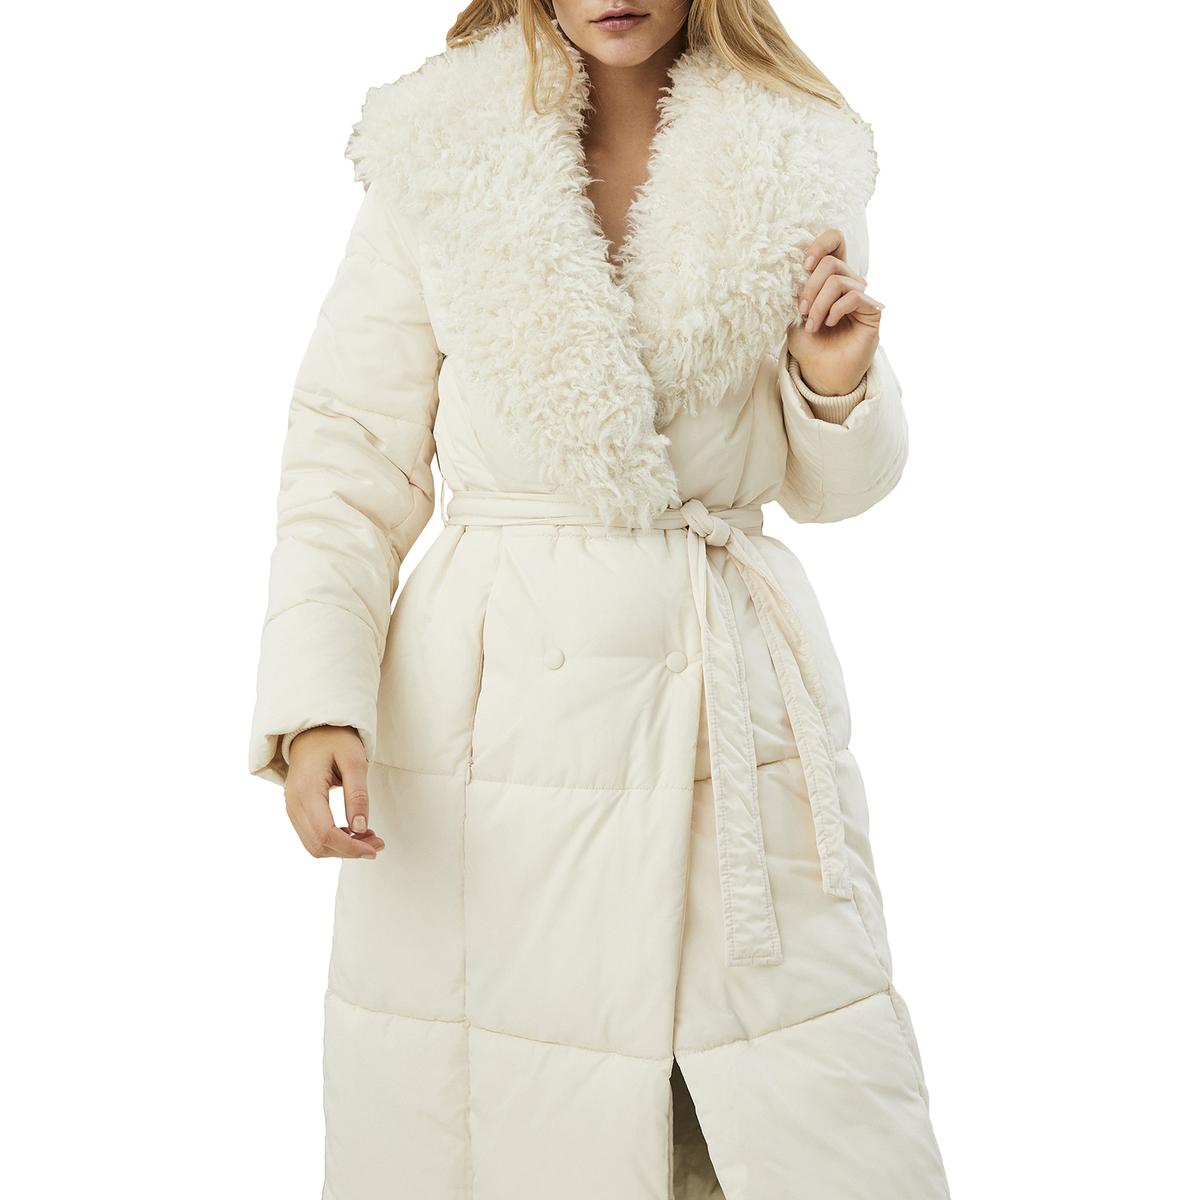 Vero Moda Women's Long Quilted Maxi Wrap Coat with Collar | eBay